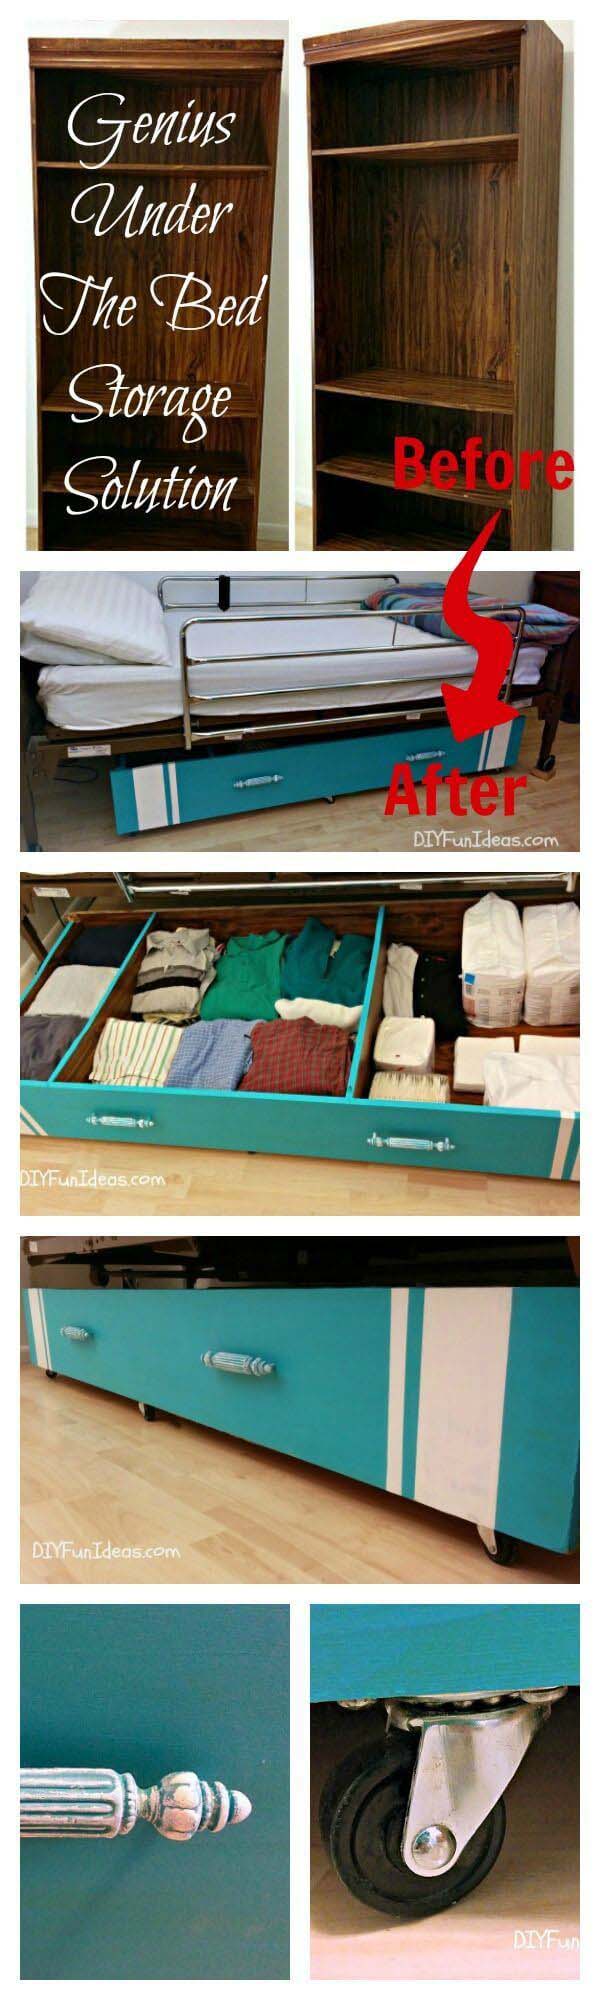 Use Every Inch with Rolling Under-Bed Storage #storage #organization #decorhomeideas